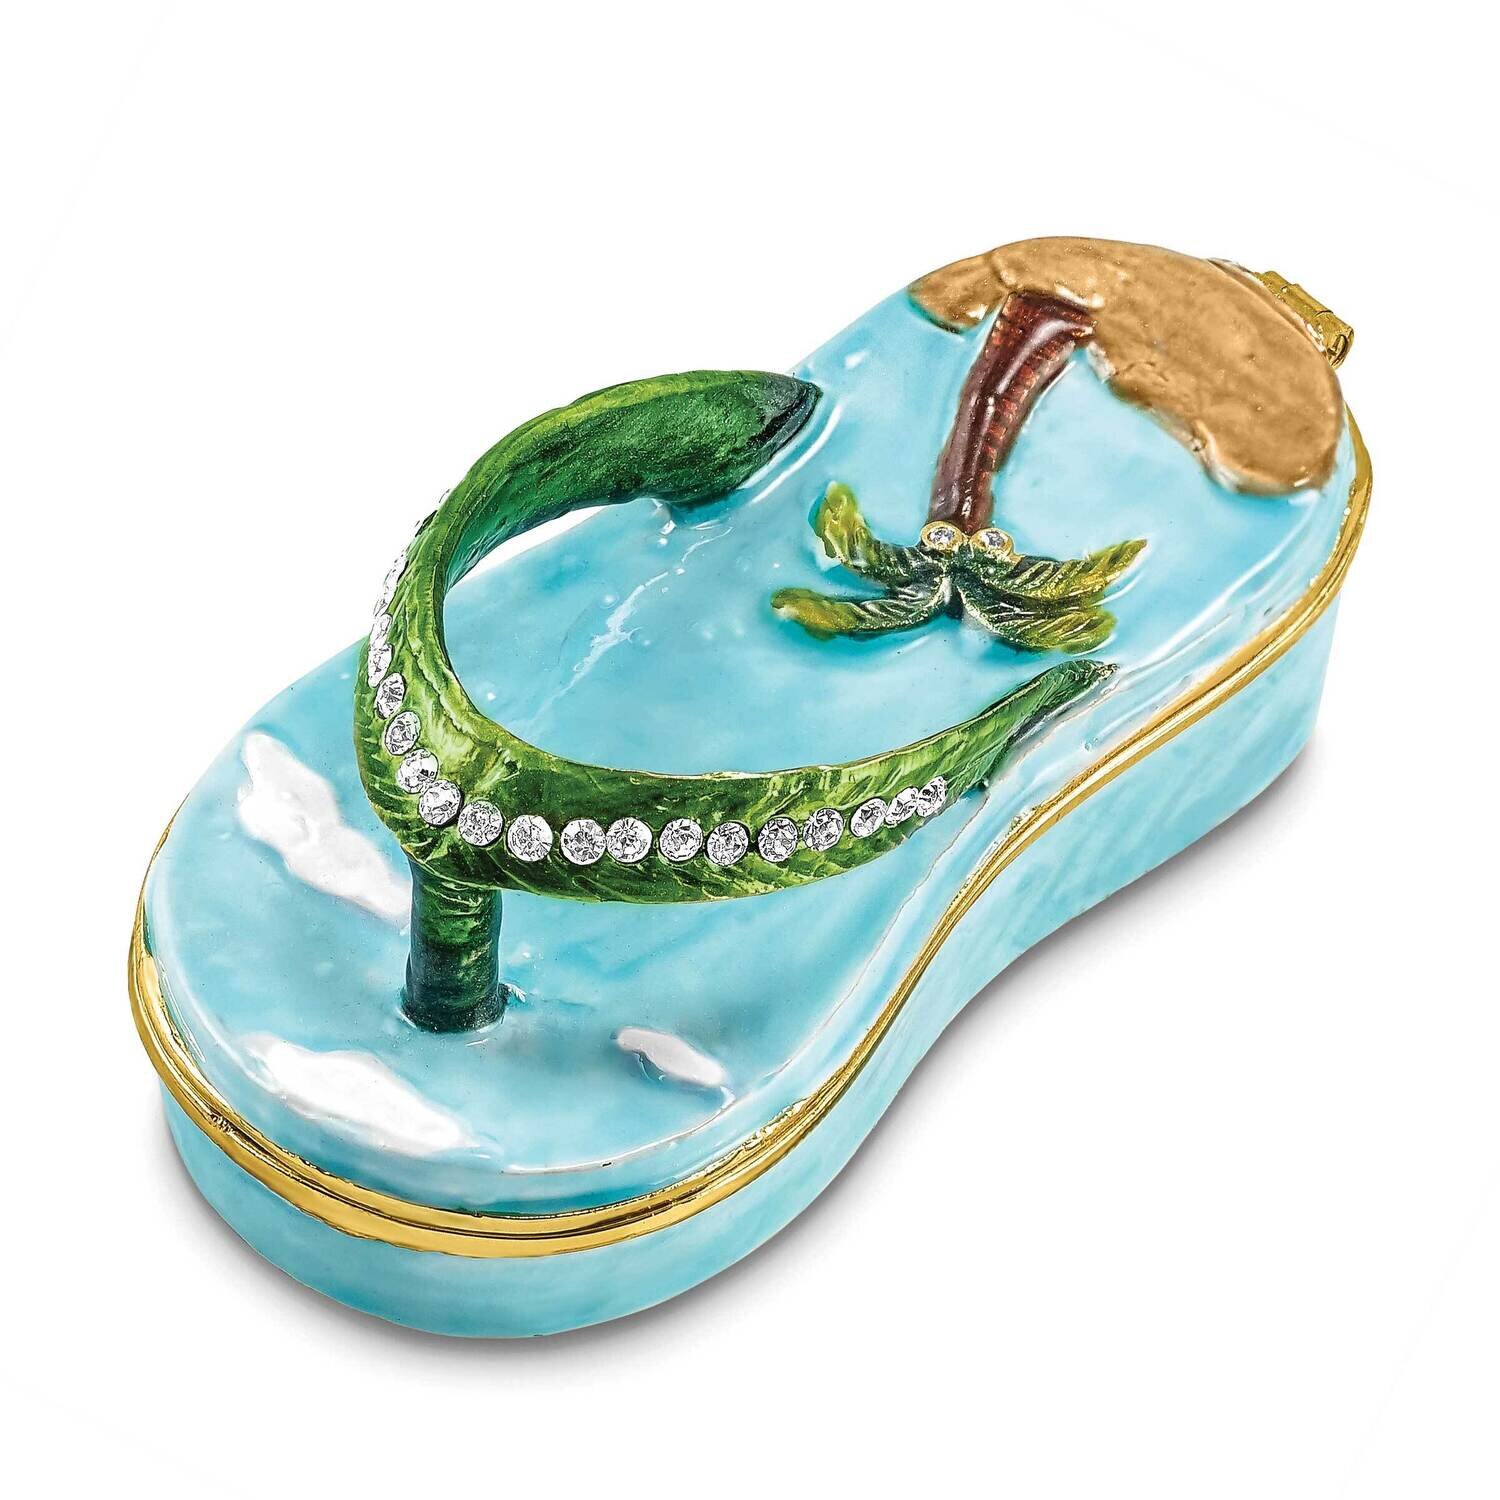 Sandy Toes Sandal with Palm Tree Trinket Box Bejeweled BJ4050